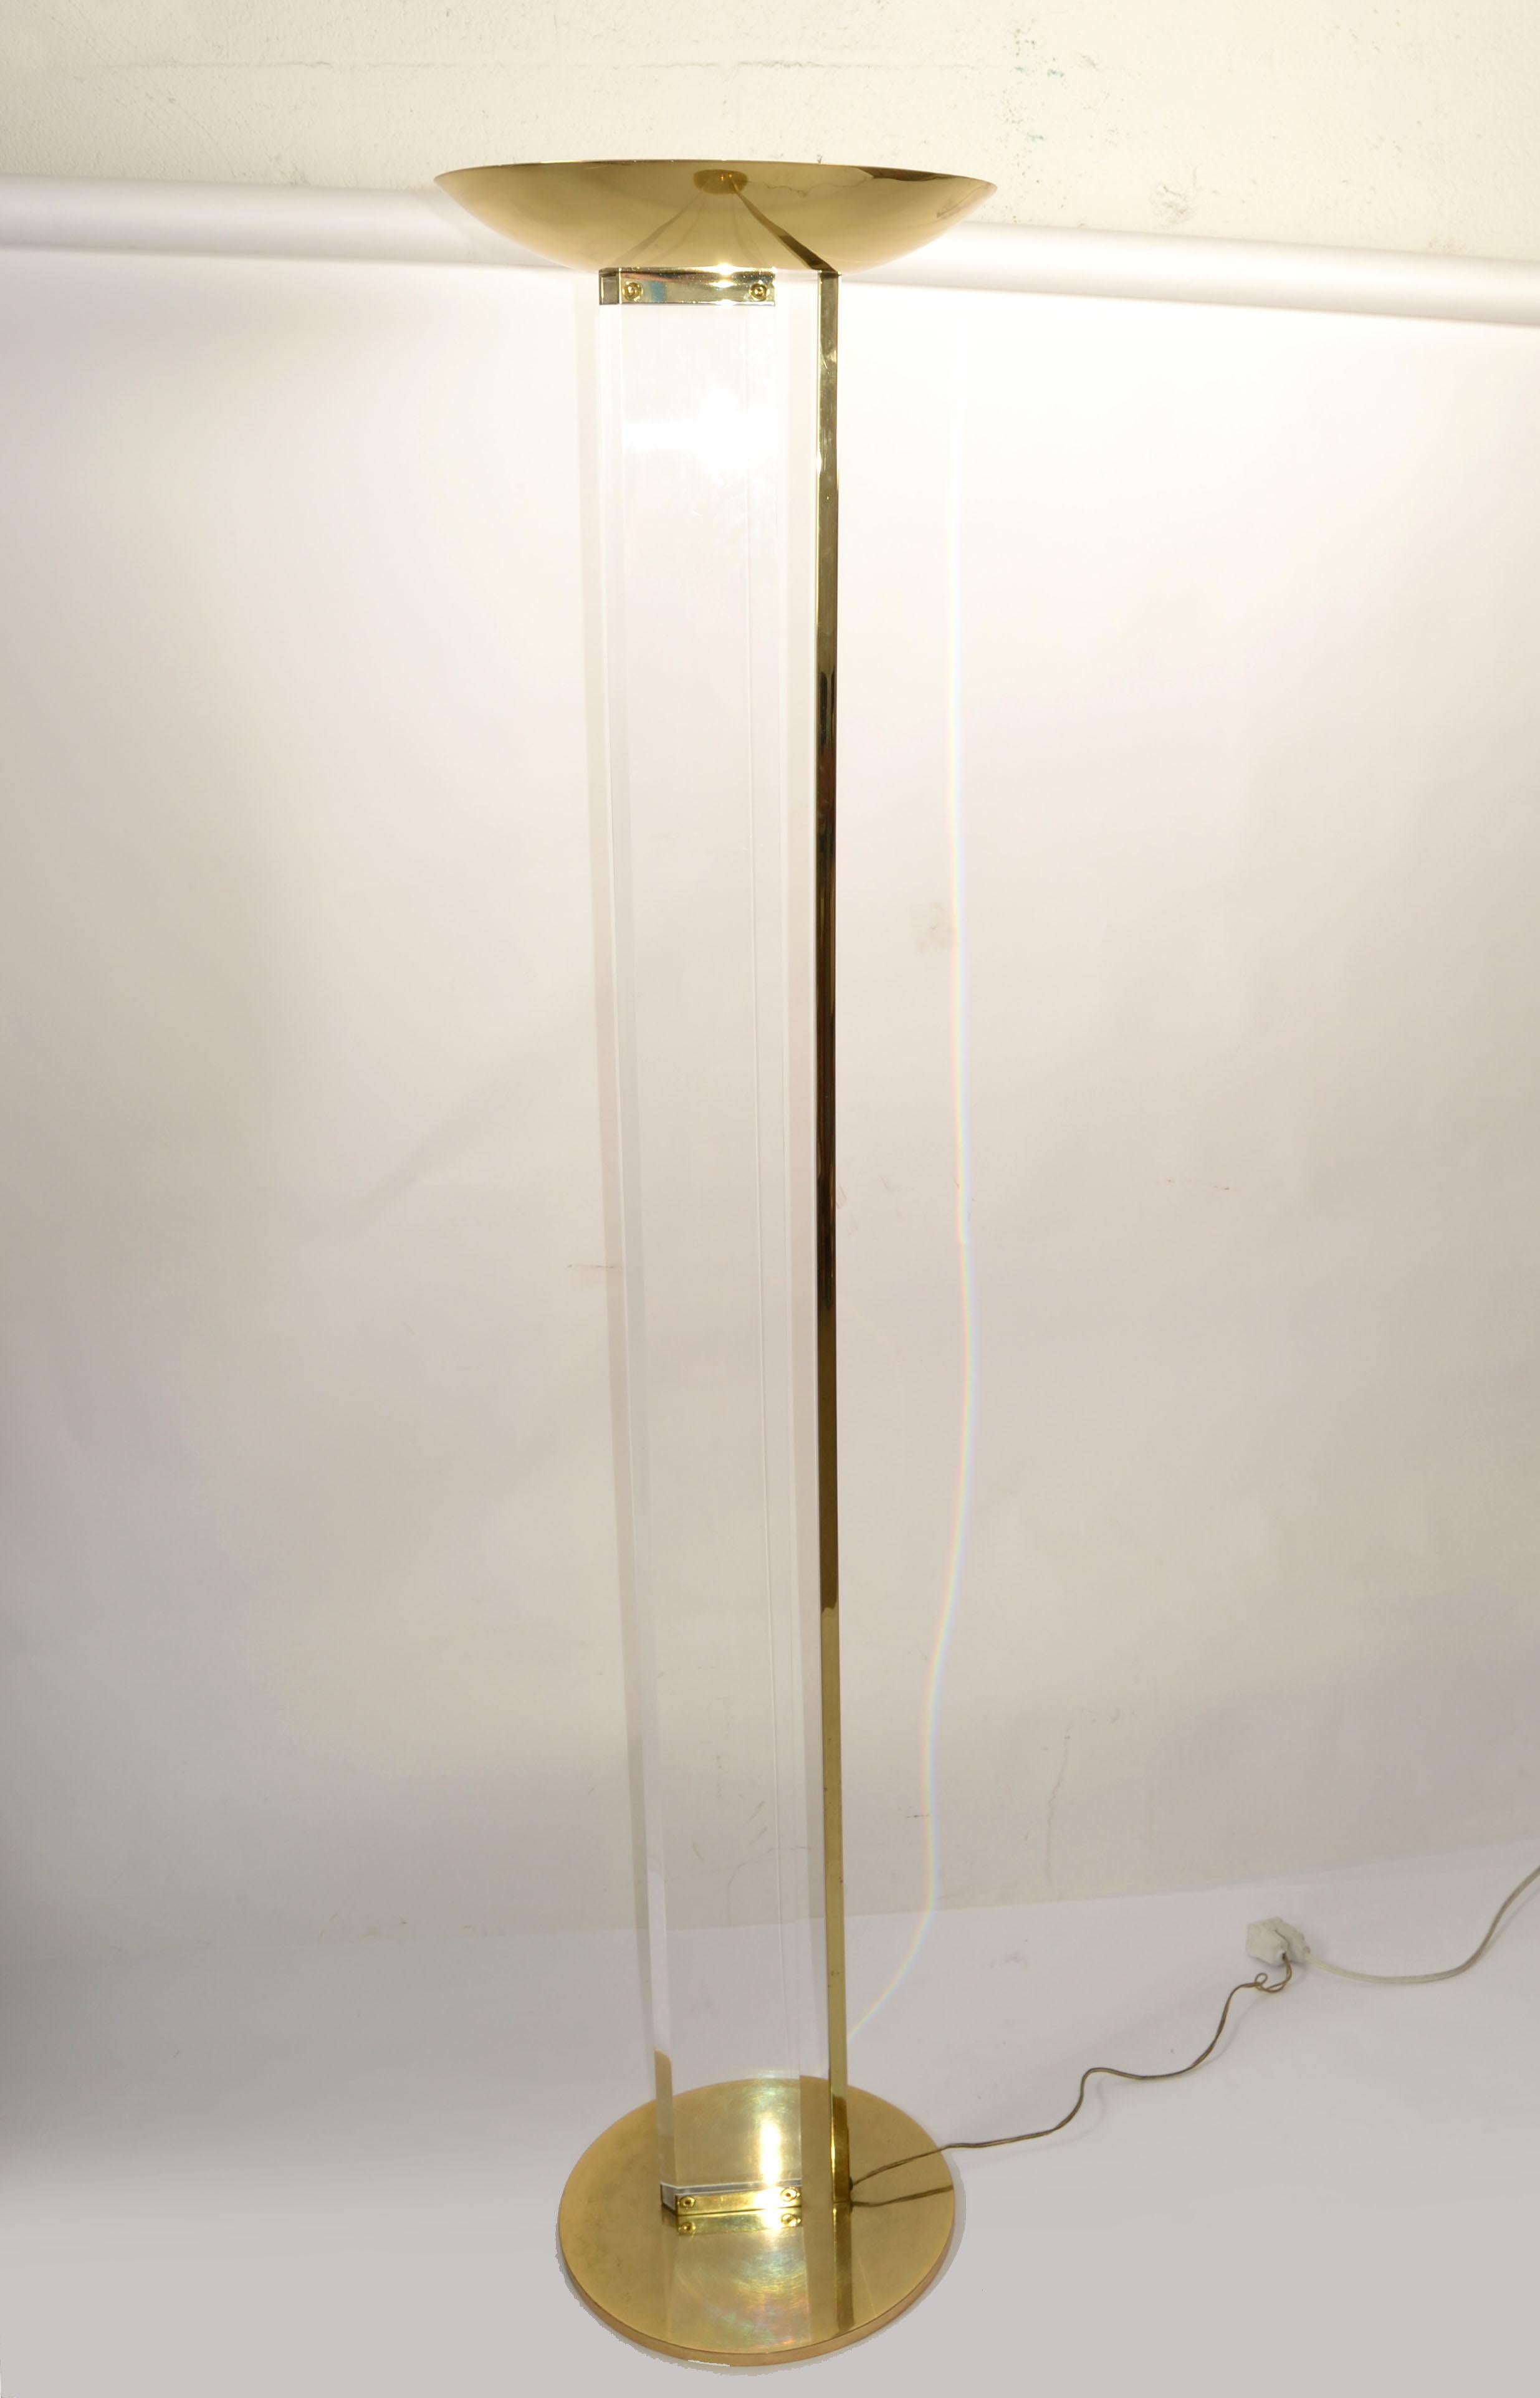 Fredrick Ramond Uplighter Lucite Brass Tall Floor Lamp Mid-Century Modern 1986 In Good Condition For Sale In Miami, FL